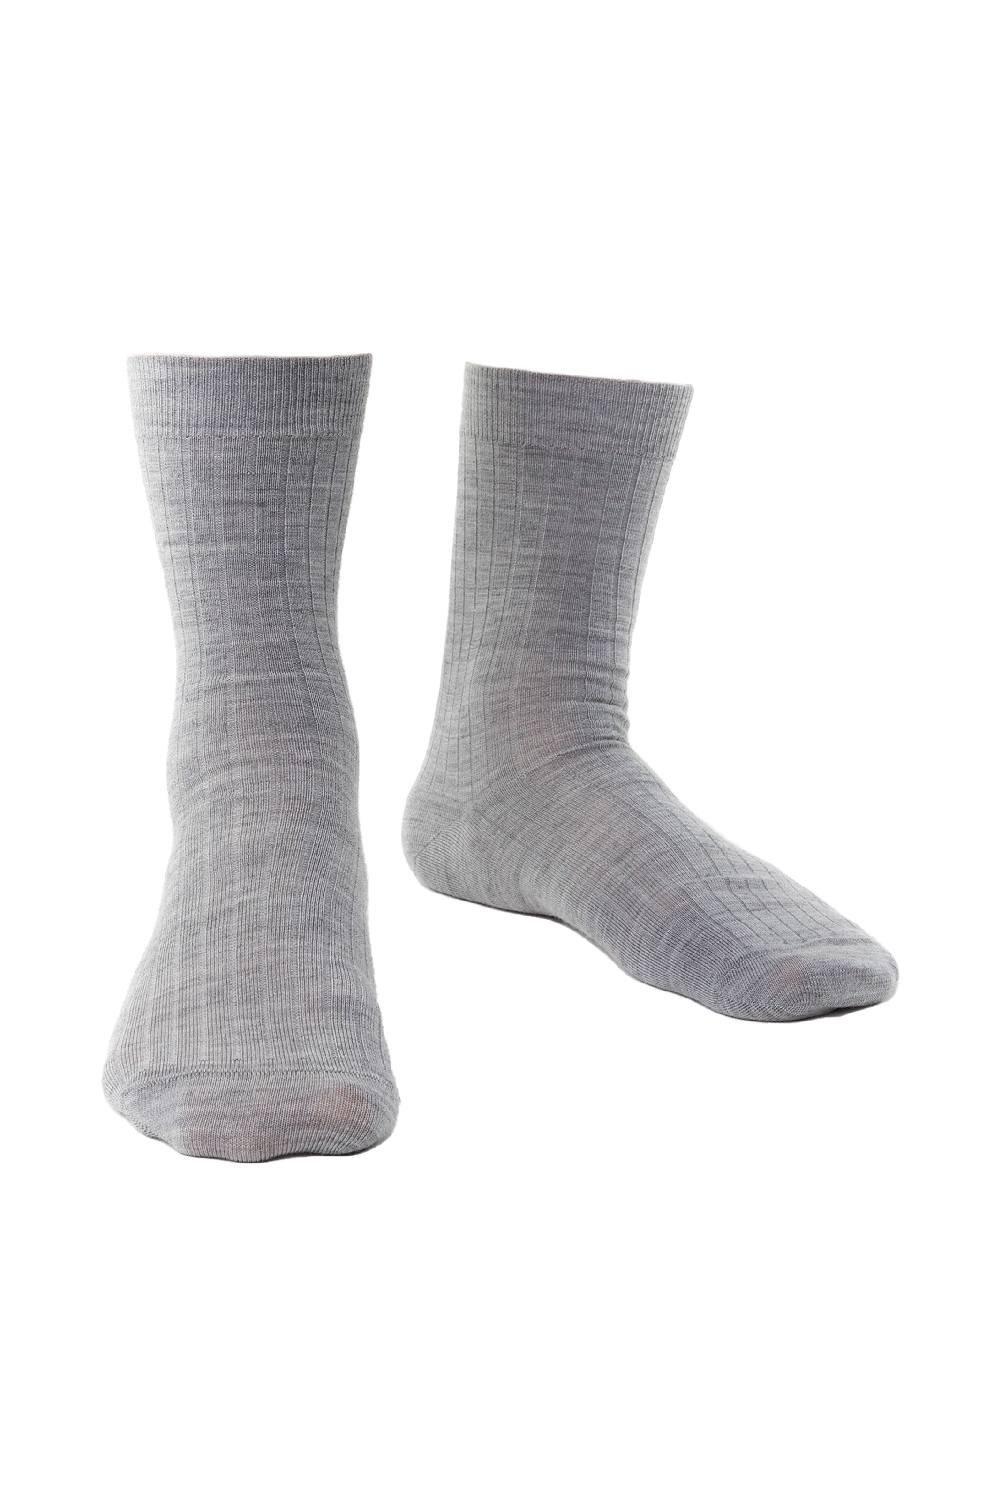 Merino Wool Non Binding Seamless Non Elastic Socks for Swollen Feet